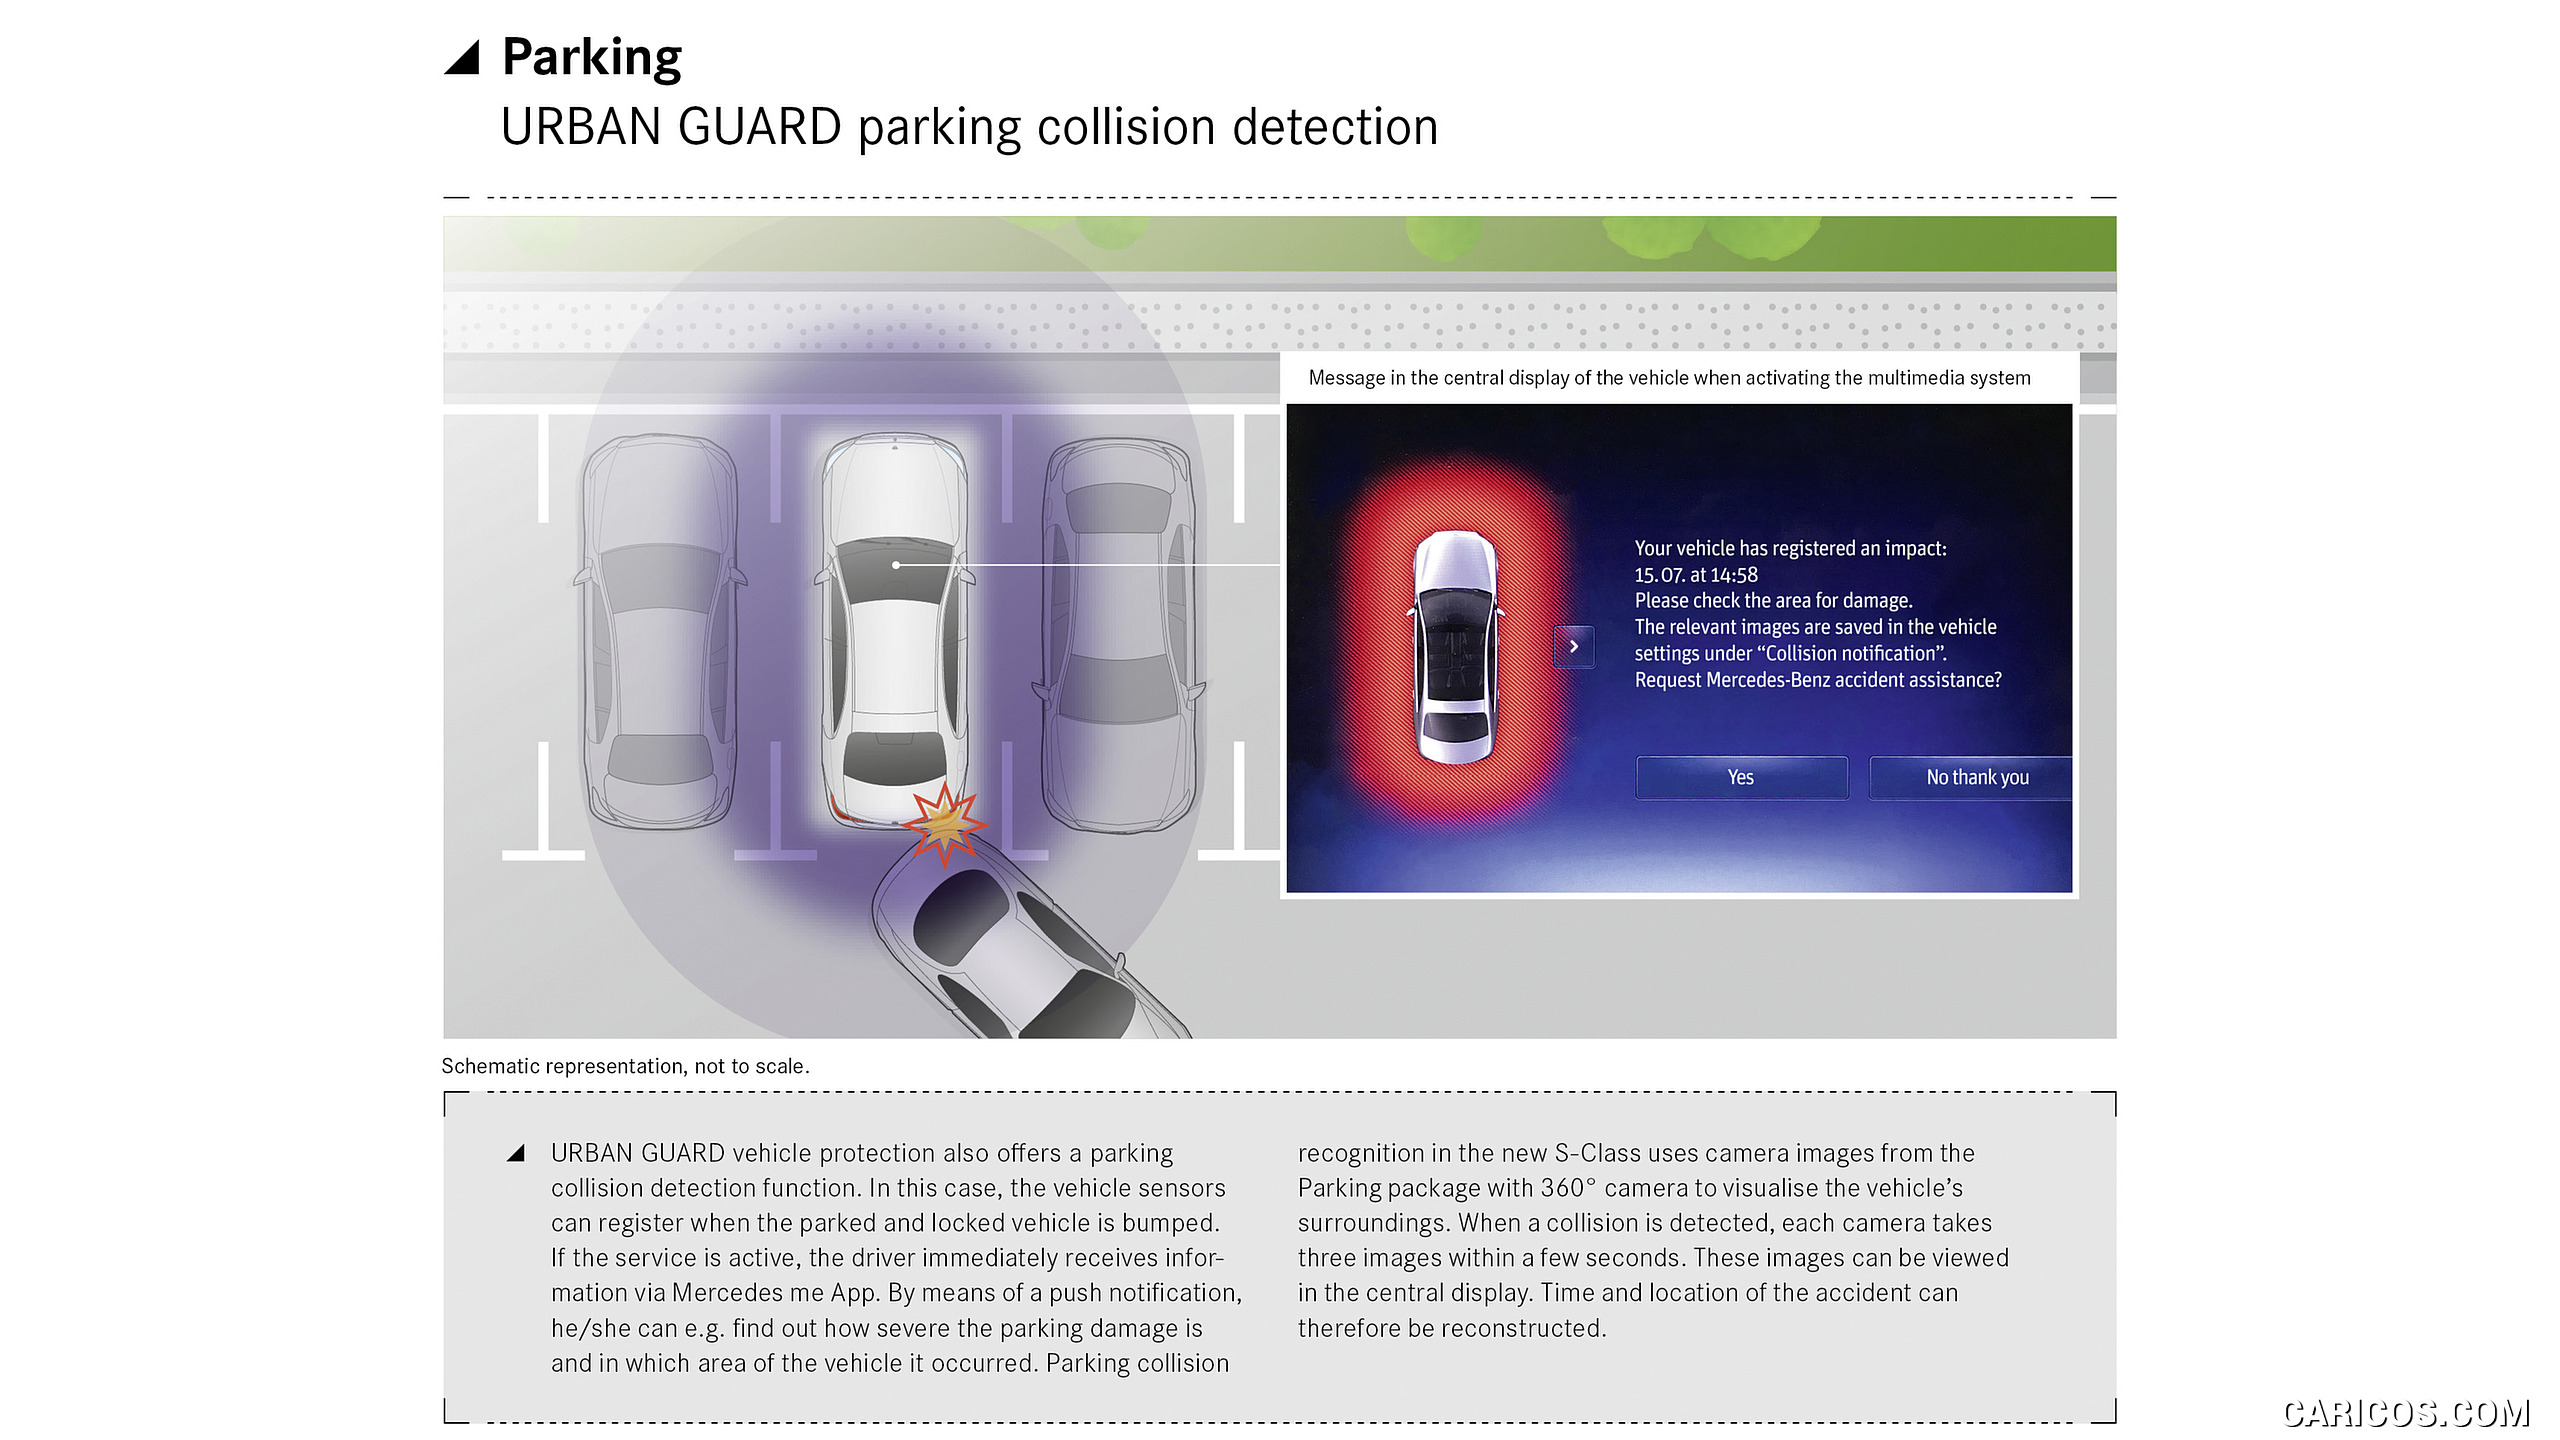 2021 Mercedes-Benz S-Class - Parking assistance: URBAN GUARD Parking Collision Detection, #209 of 316